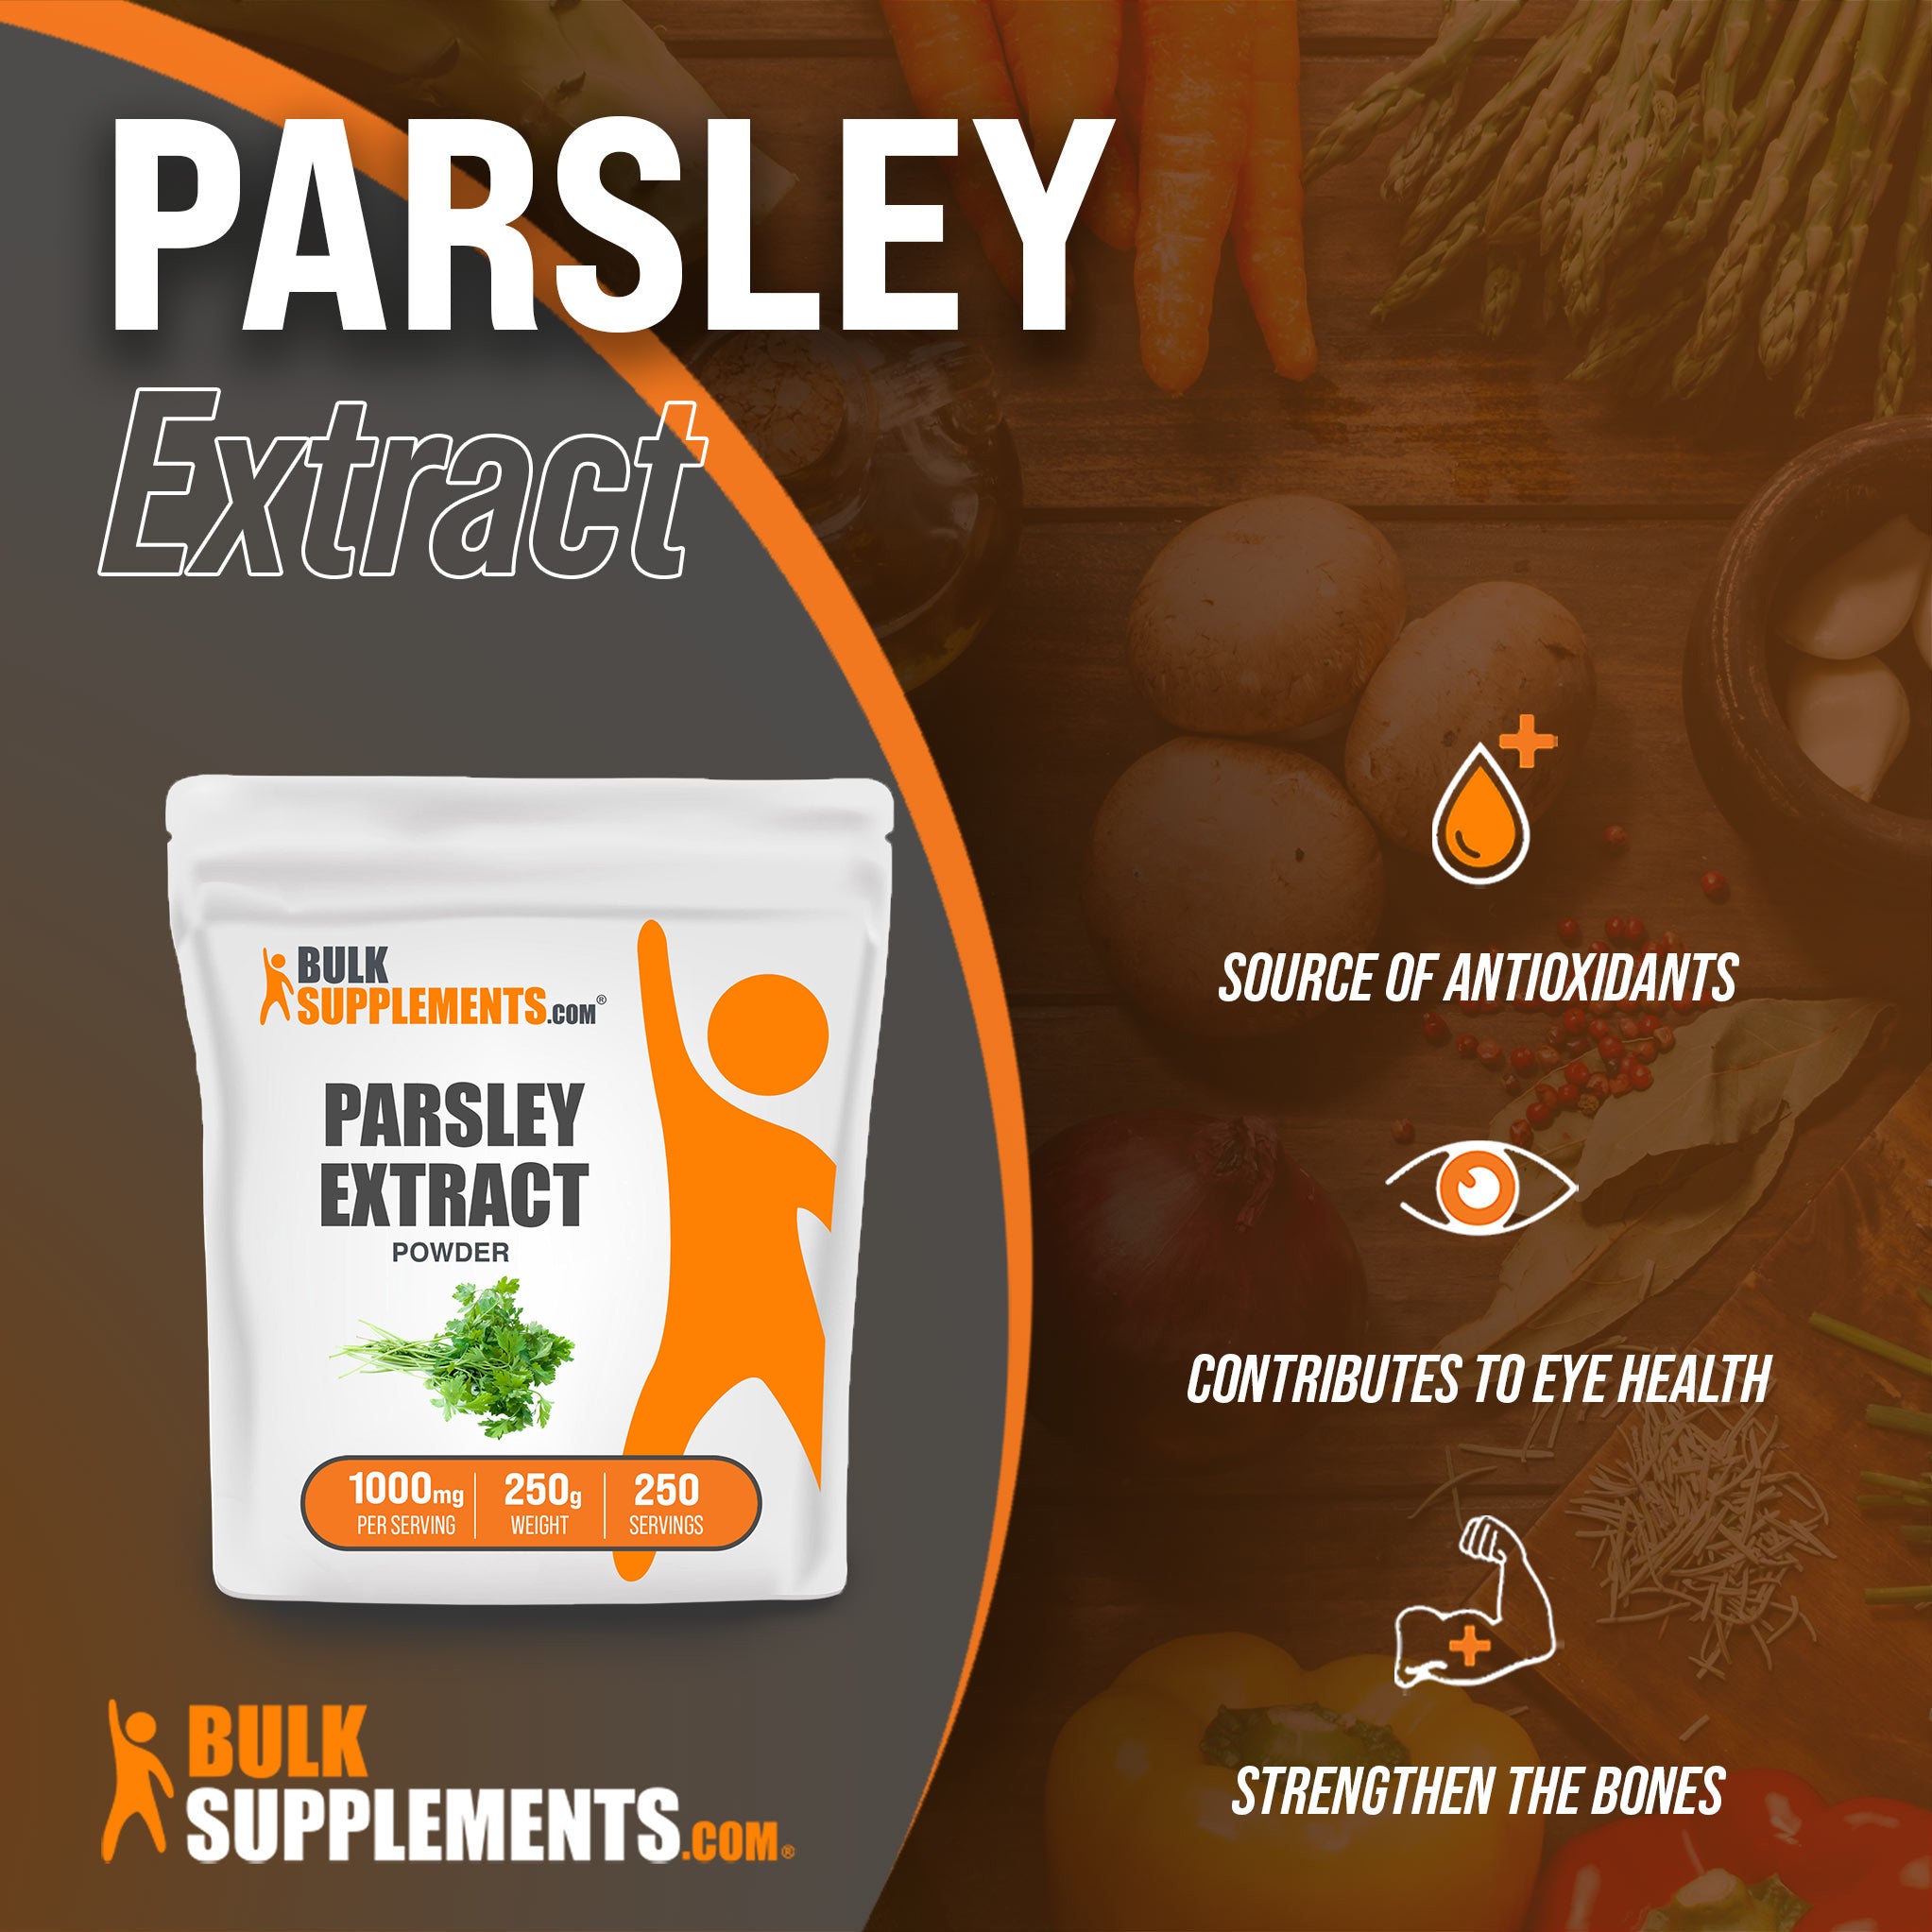 Benefits of Parsley Extract: source of antioxidants, contributes to eye health, strengthen the bones